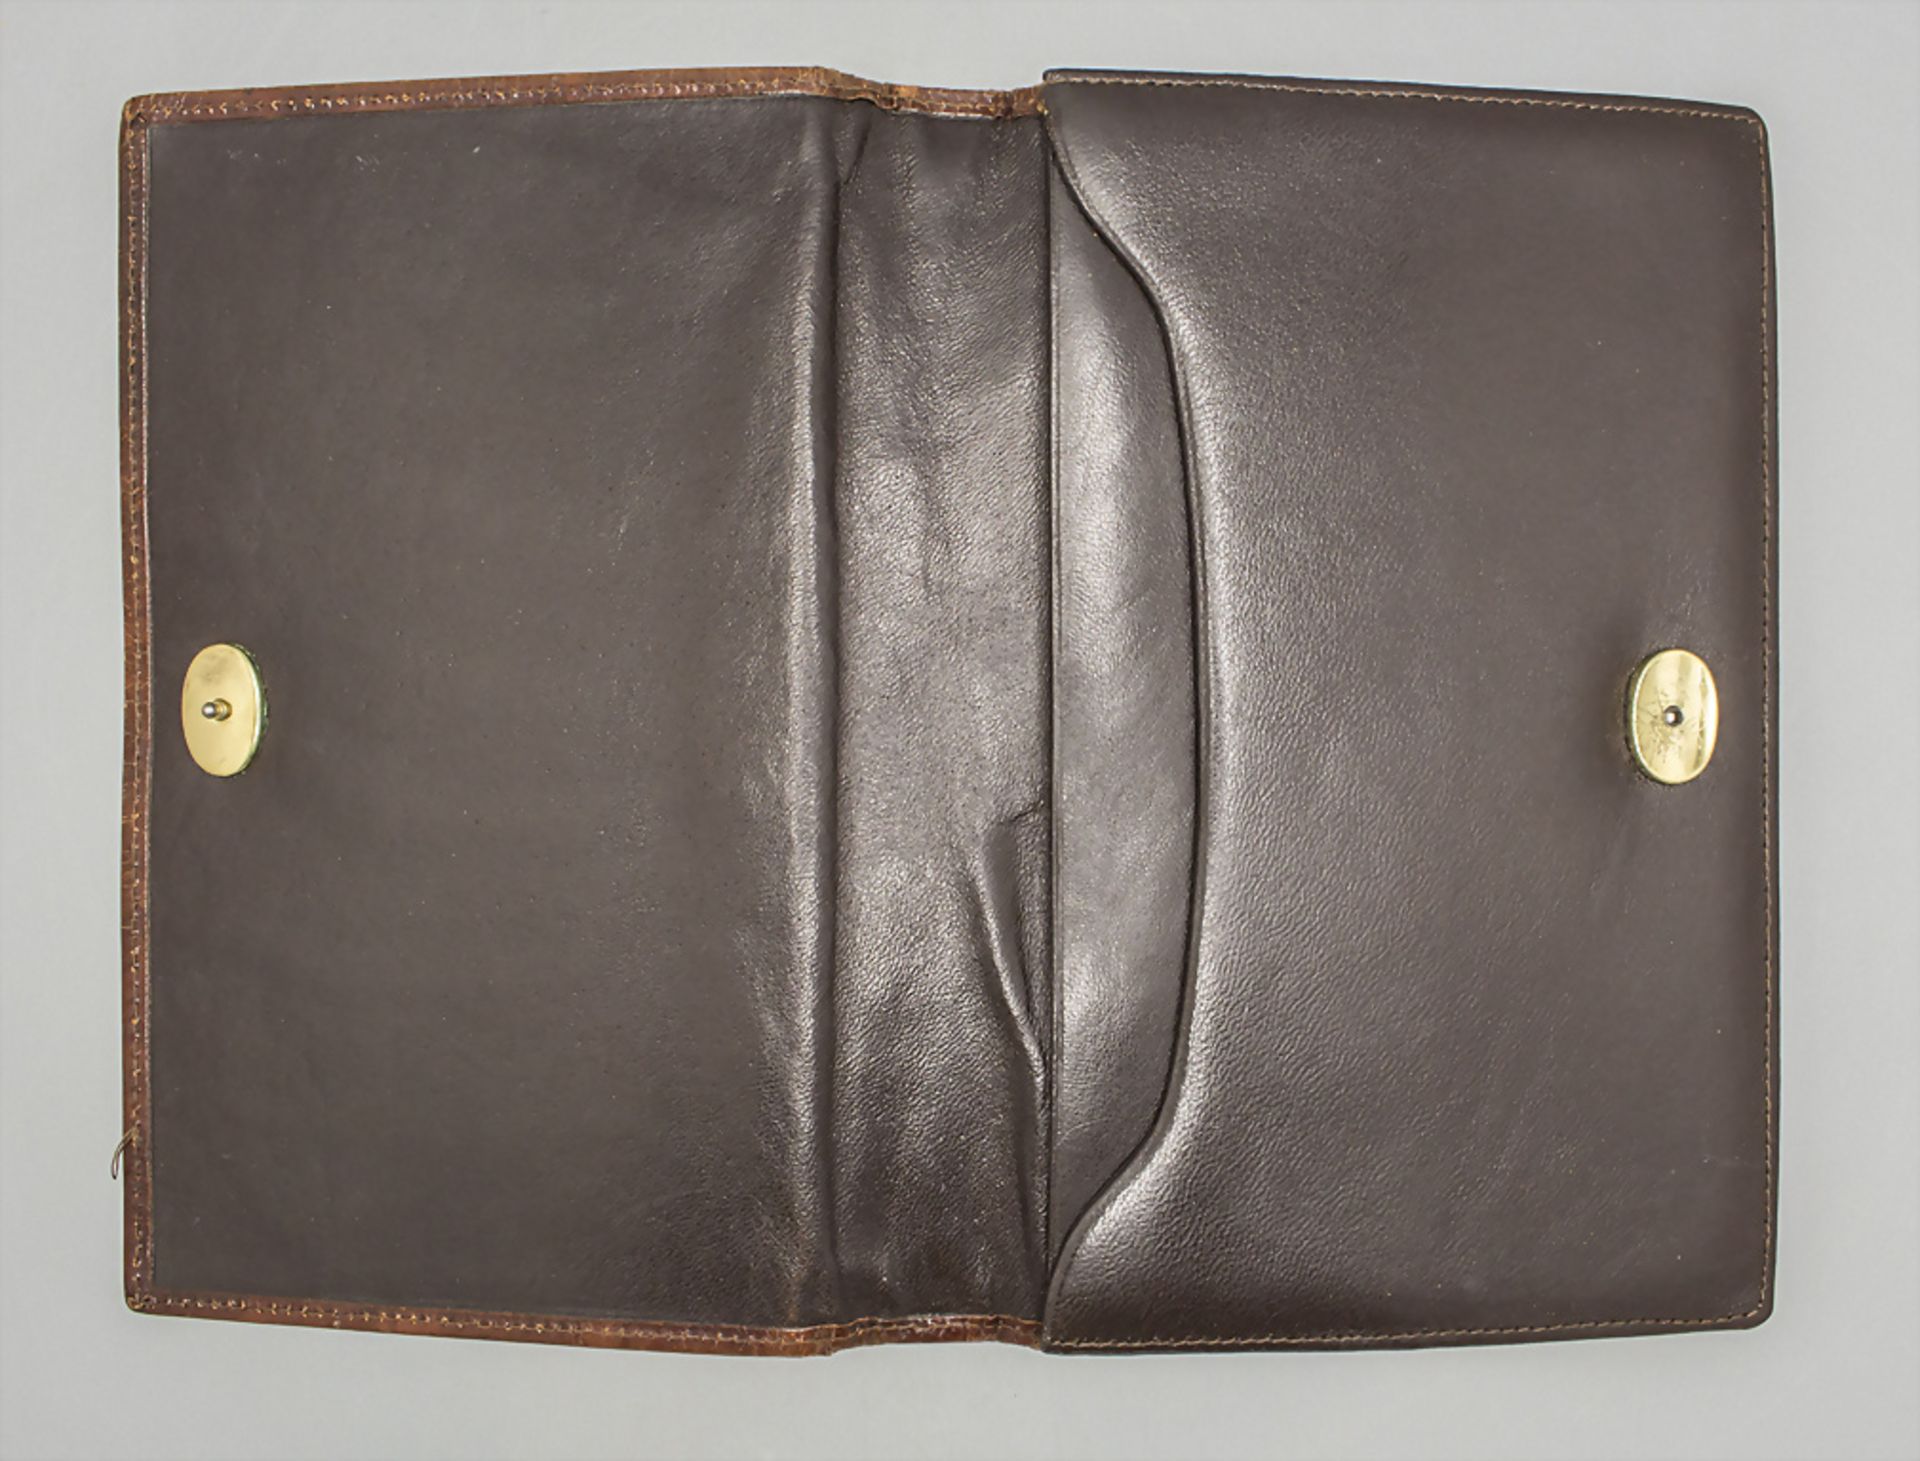 Gemusterte Lederhandtasche / A patterned leather handbag, wohl Italien - Bild 4 aus 5